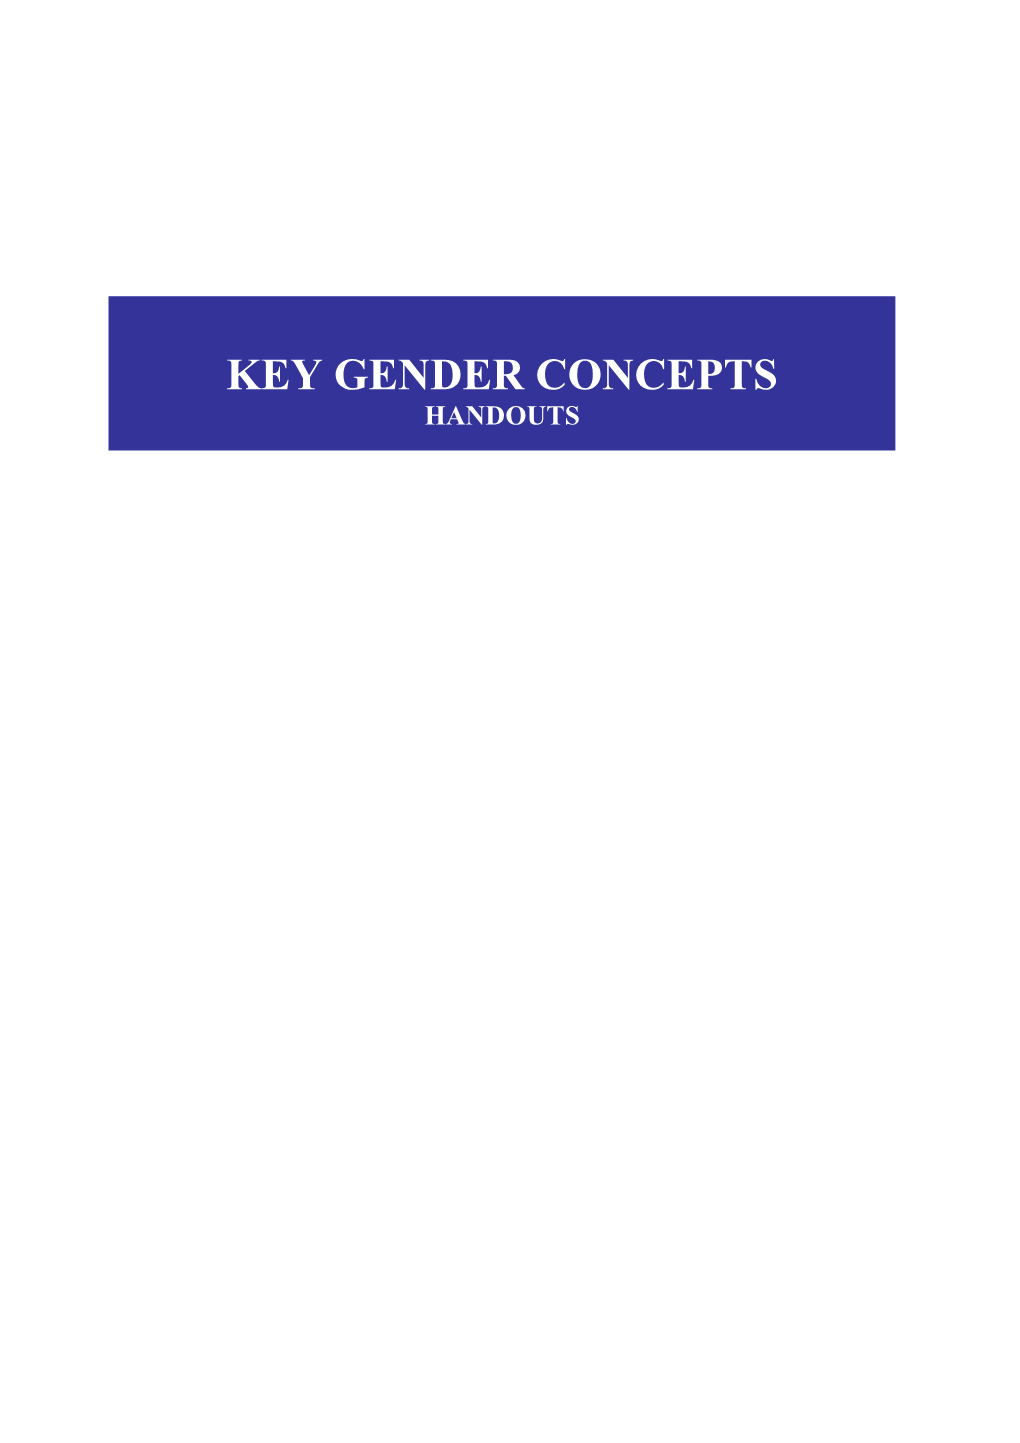 1. Key Gender Concepts Handouts 24